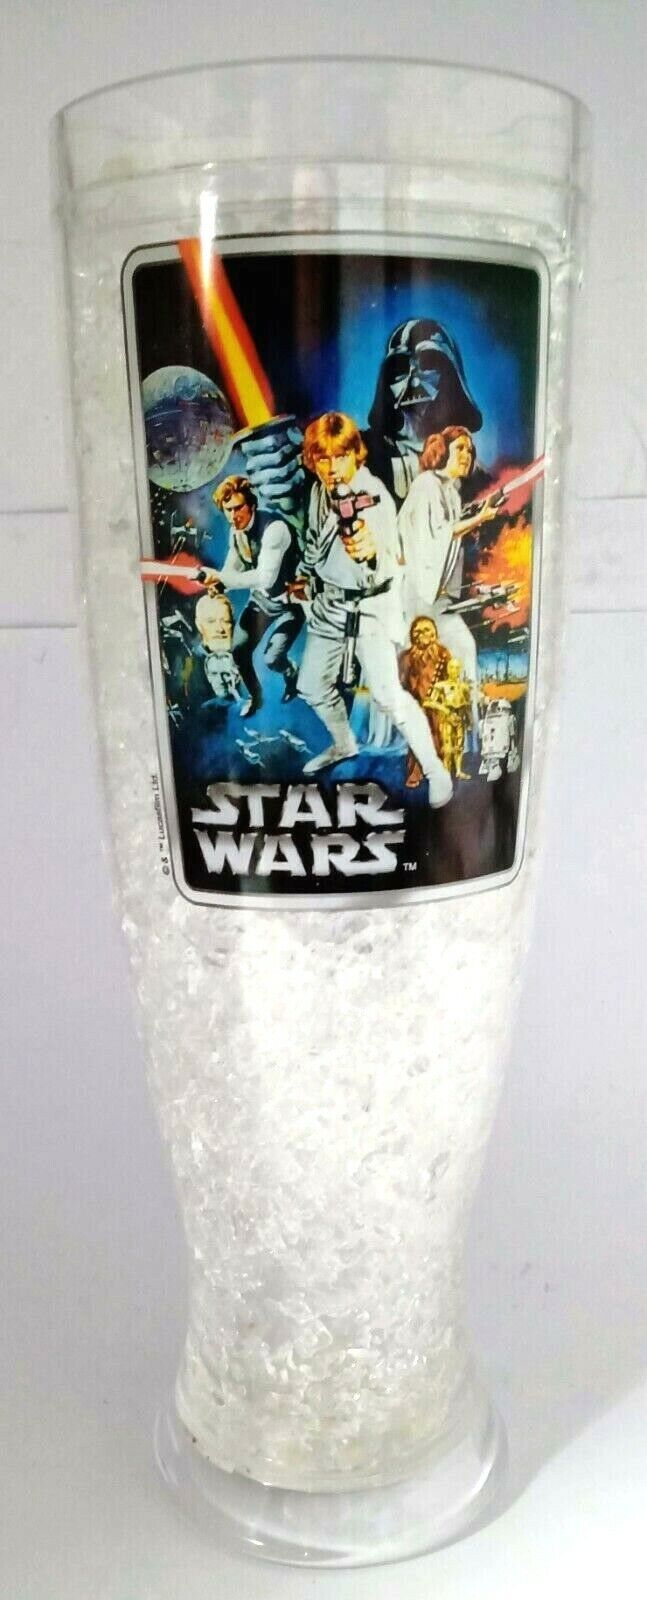 Star Wars Large Freeze Gel Tumbler Cup - TM Lucasfilm Ltd.